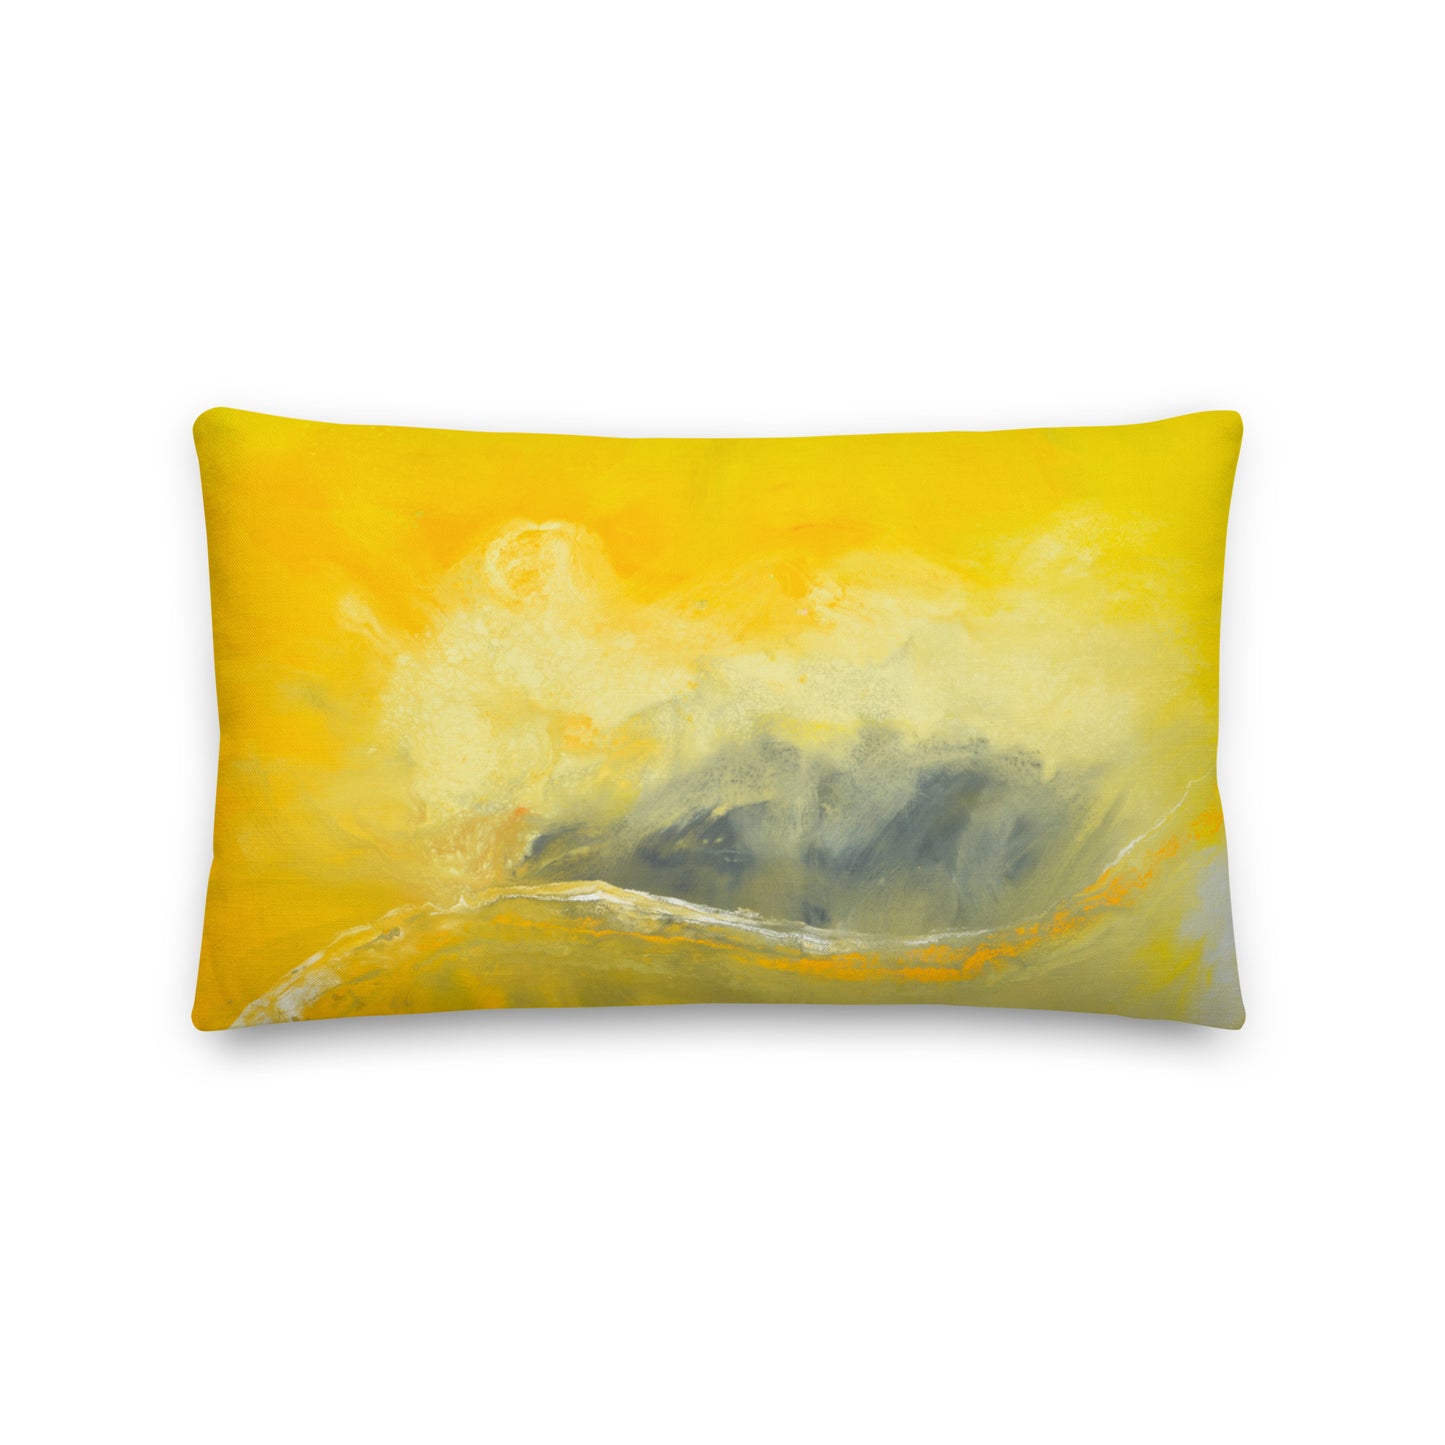 Premium Pillow - Yellow and Grey design